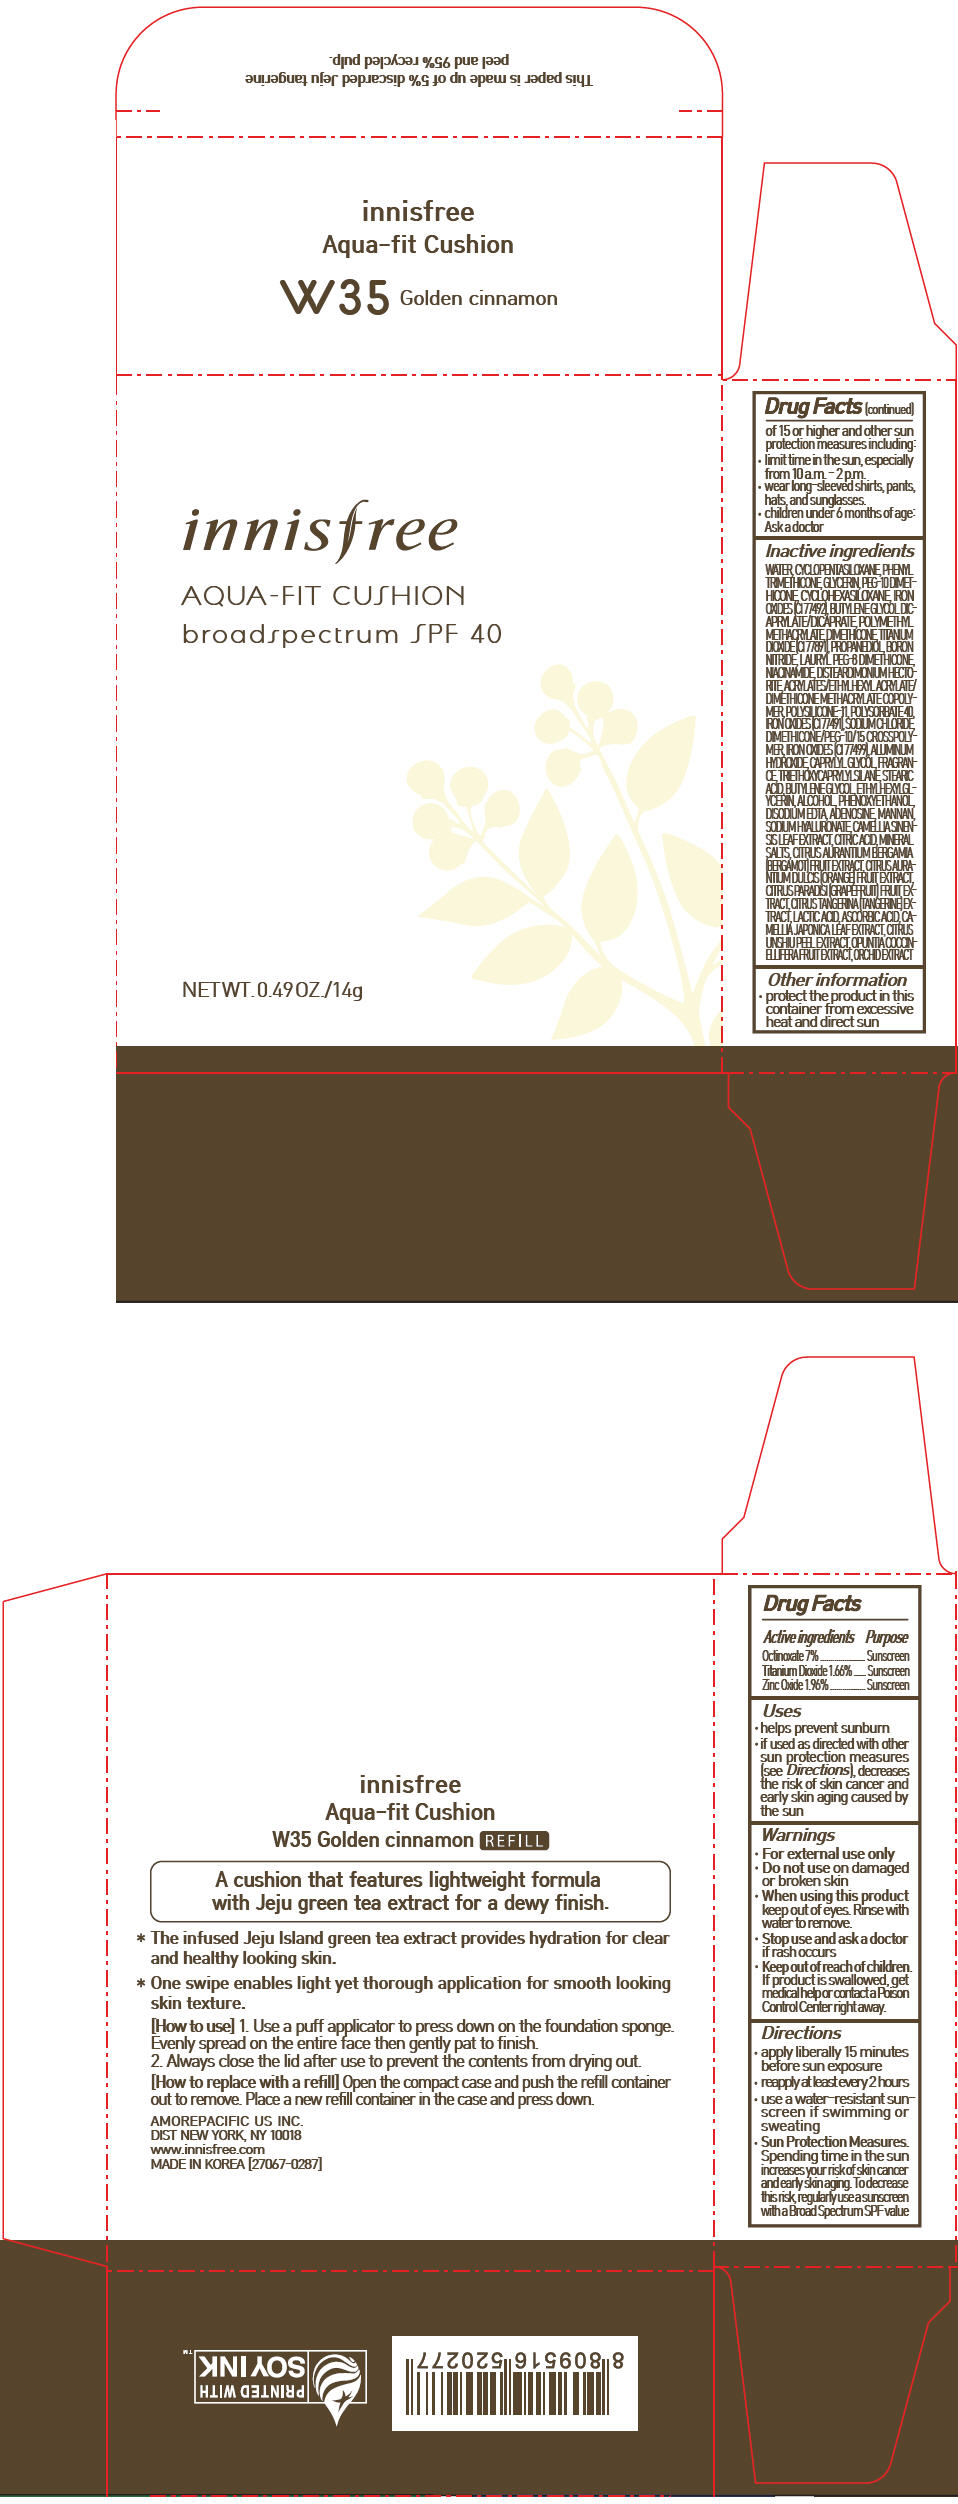 PRINCIPAL DISPLAY PANEL - 14 g Container Carton - W35 Golden cinnamon